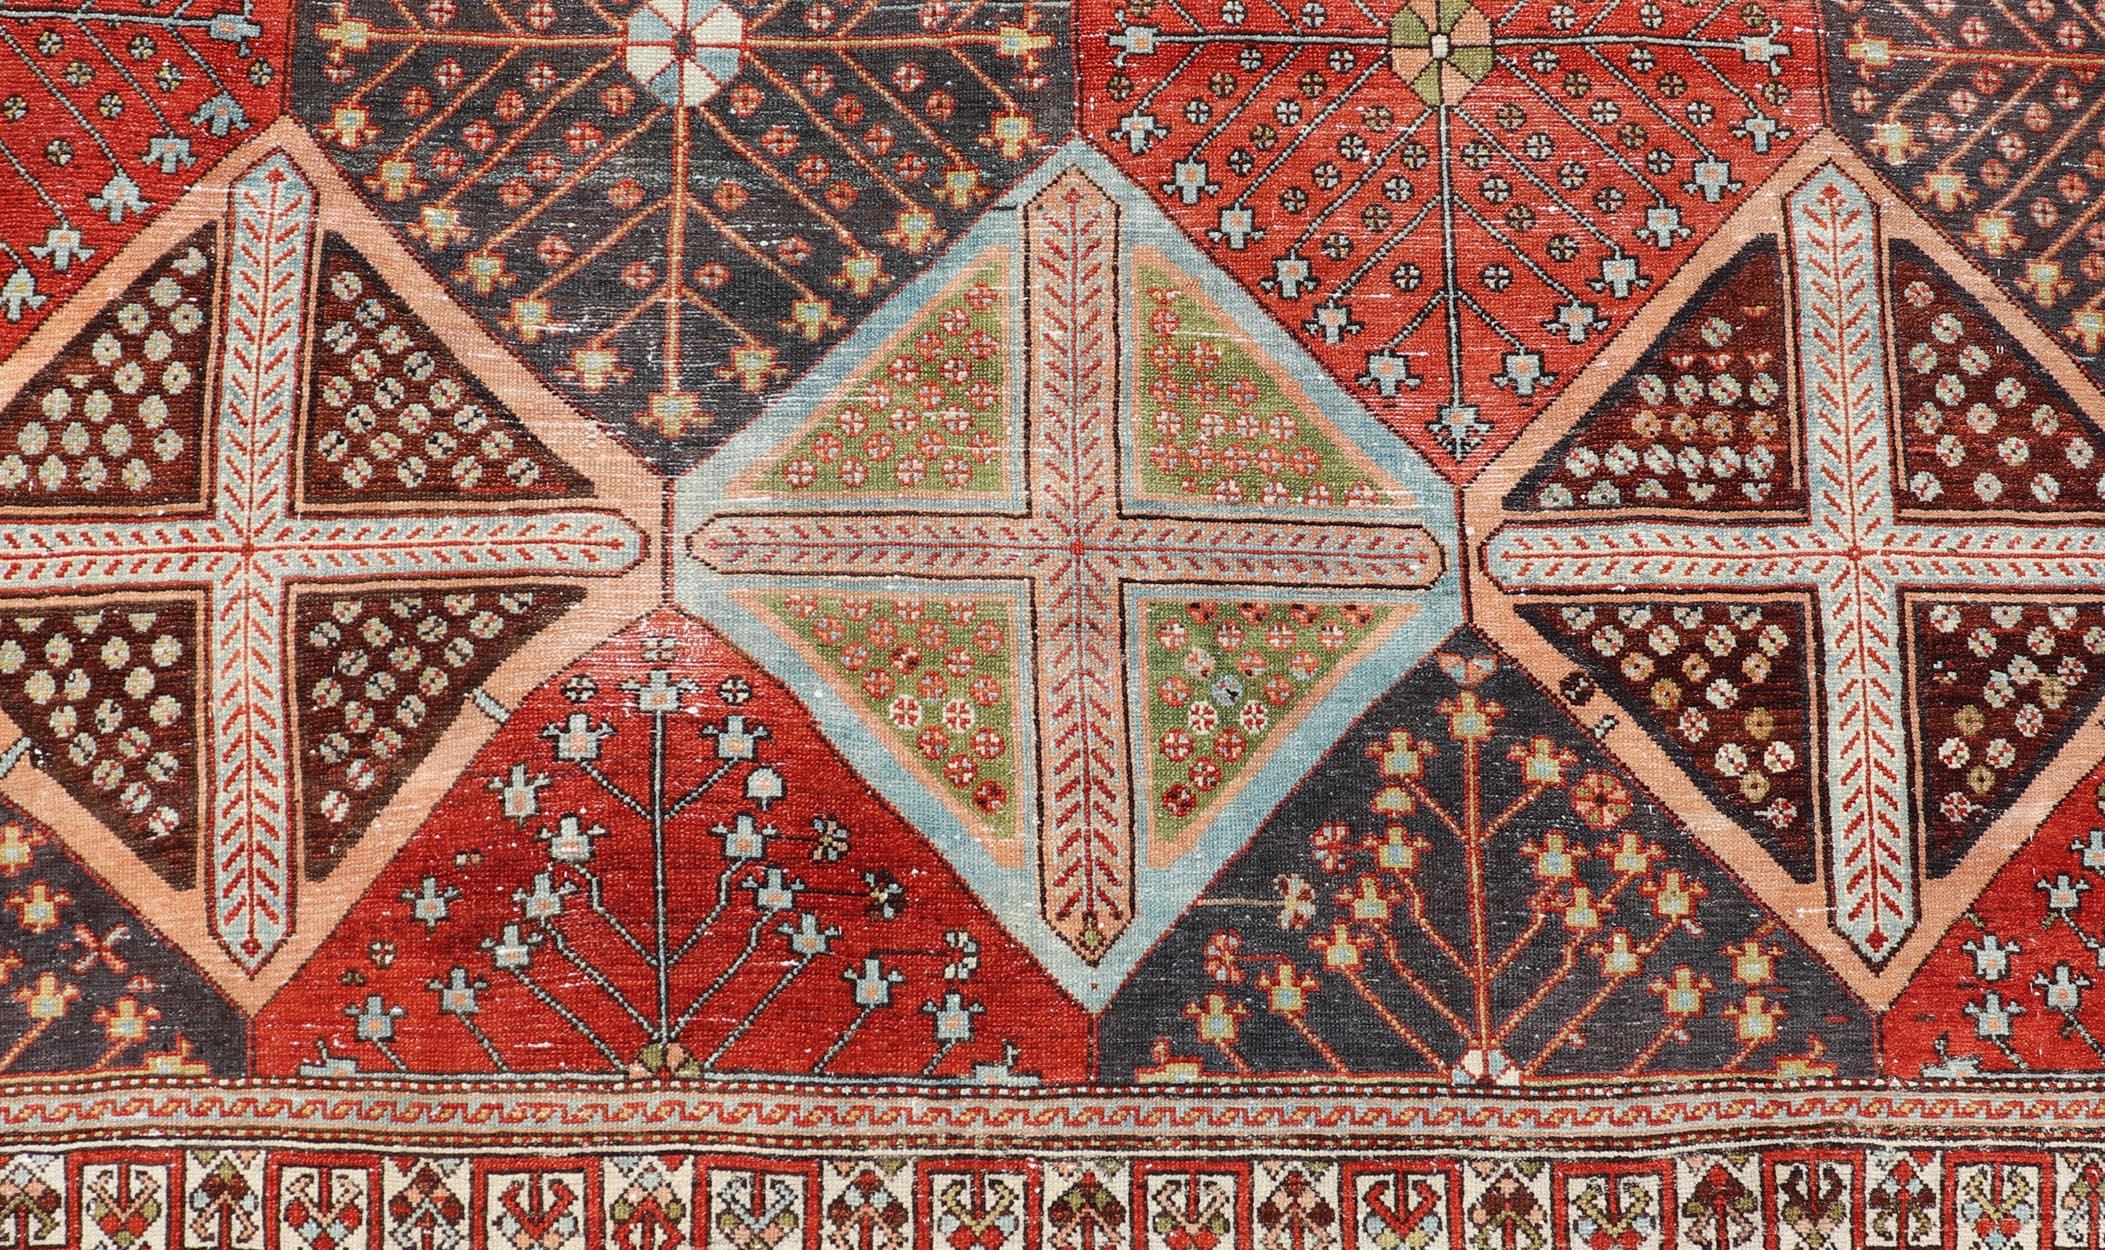 Wool Antique Persian All-Over Large Diamond Design Bakhtiari Rug in Multi Colors